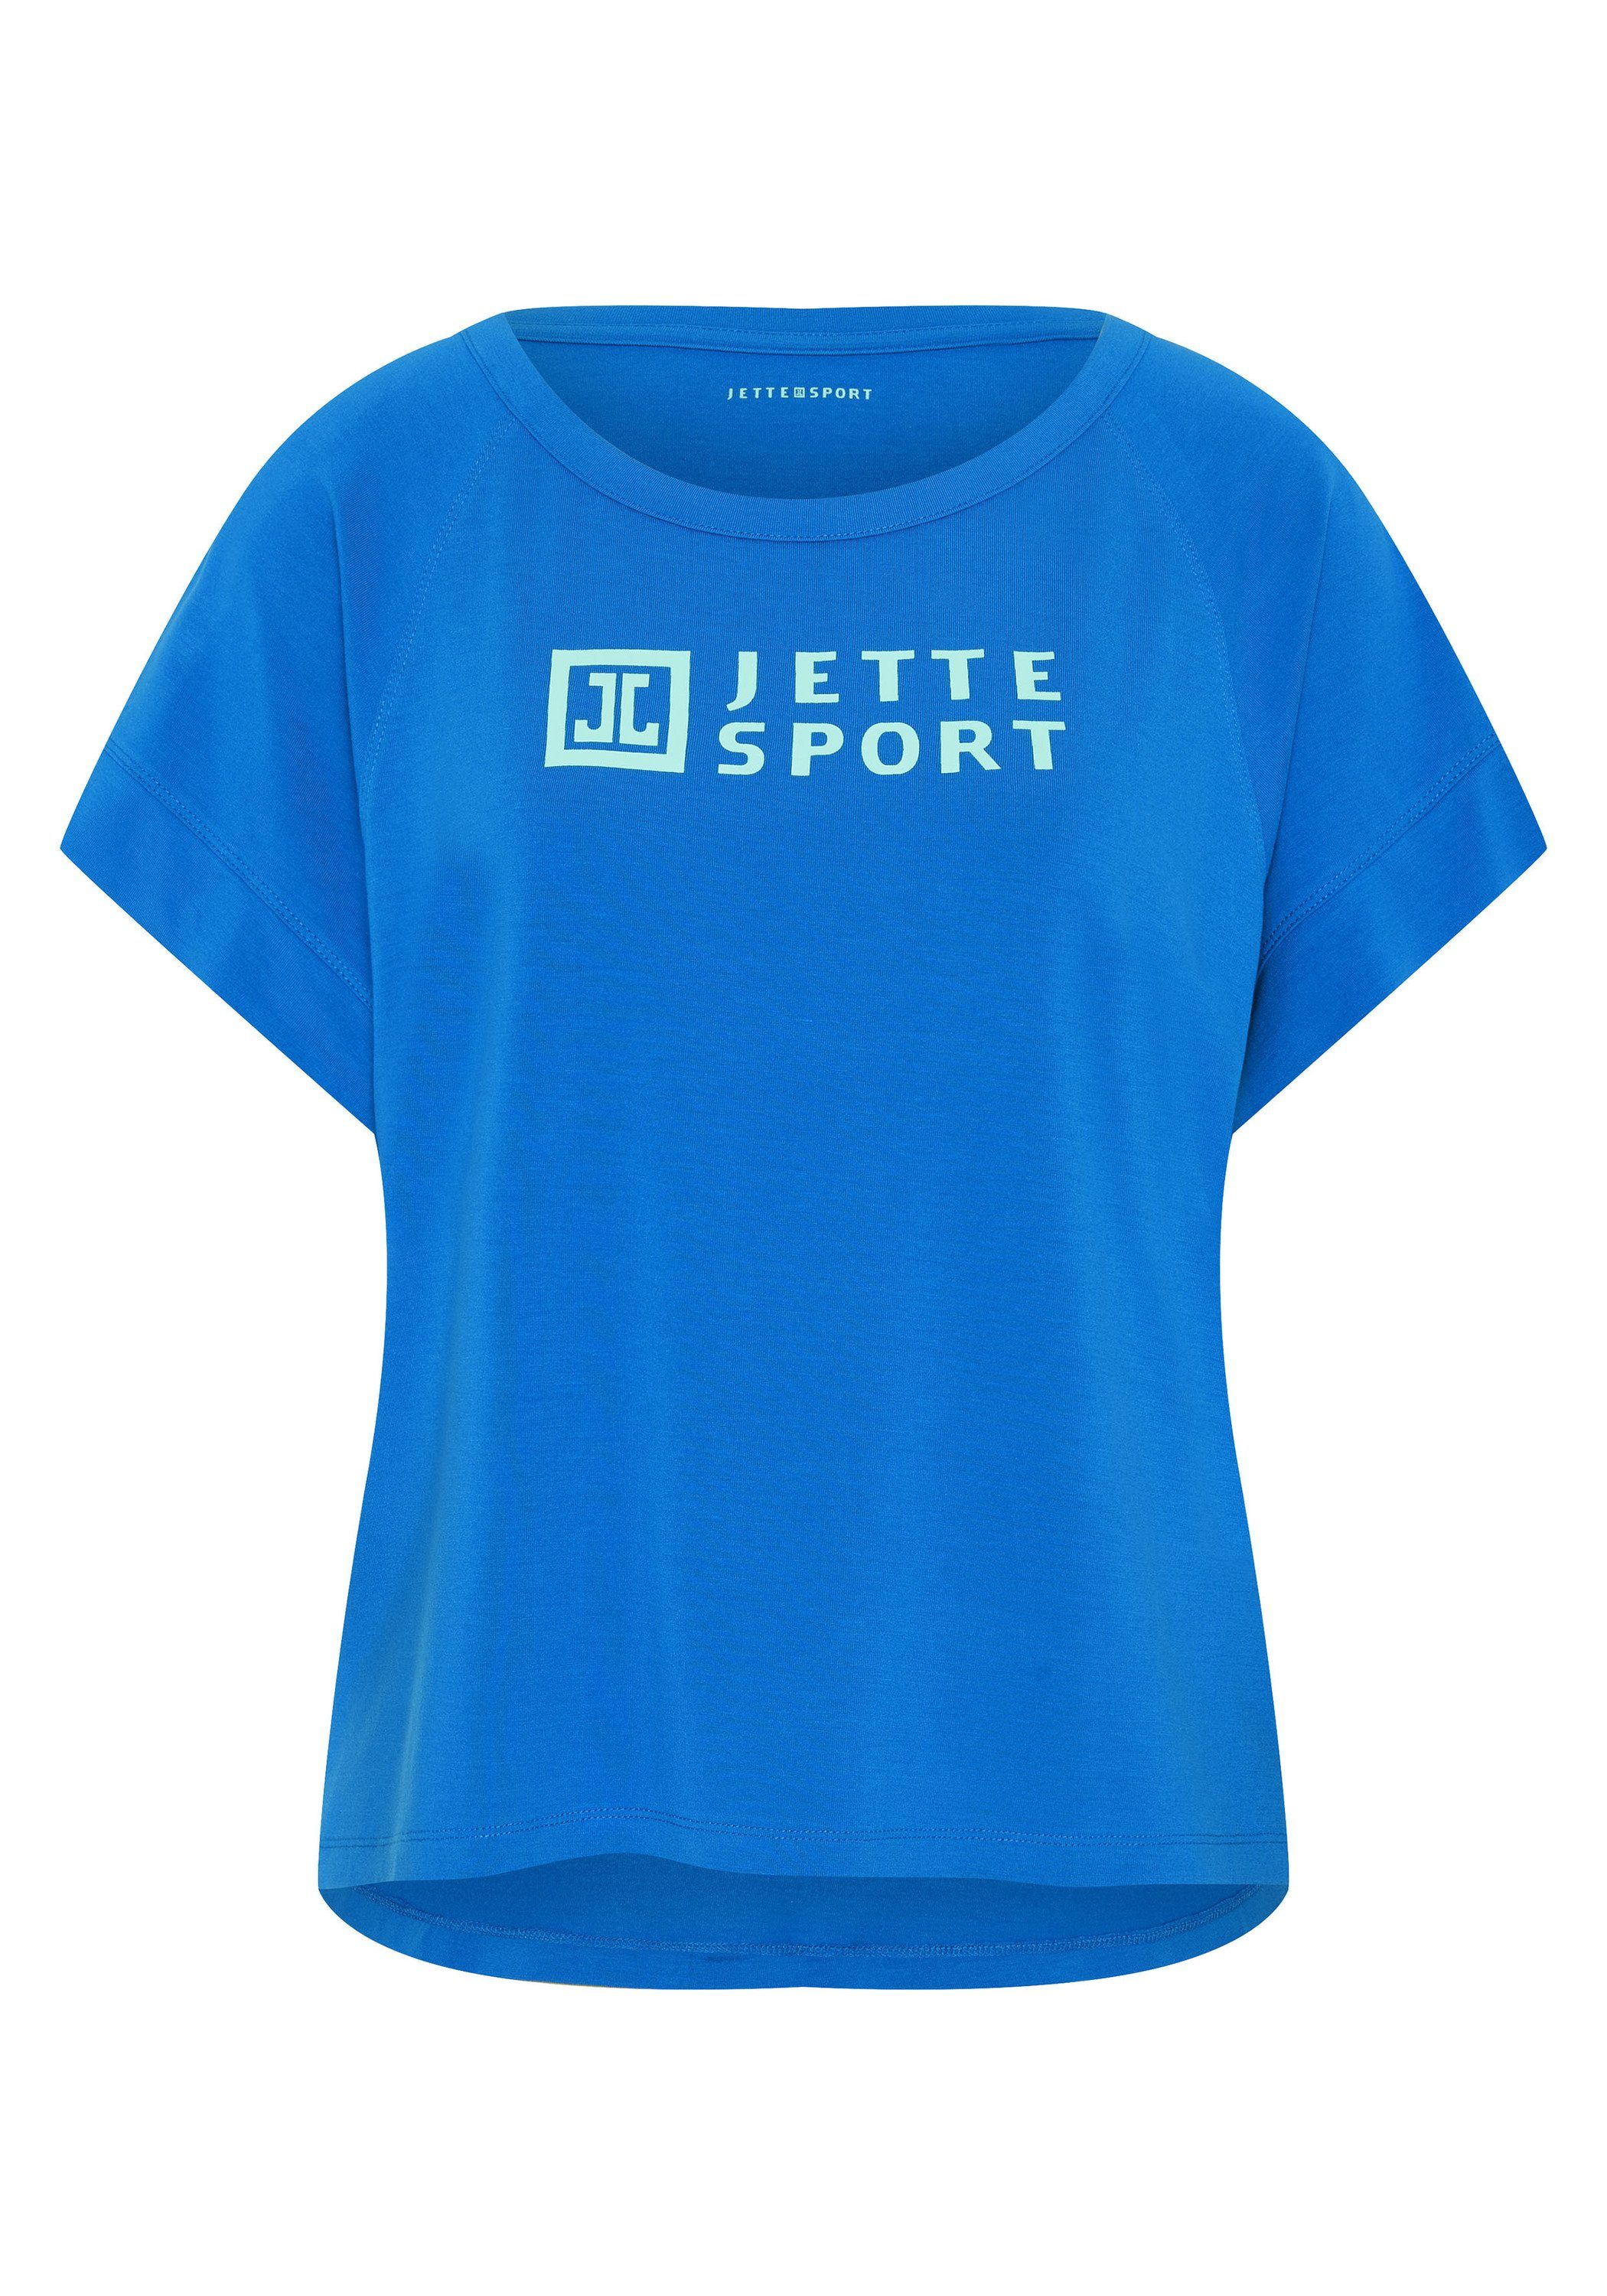 JETTE SPORT Print-Shirt Comfort-Fit und boxy Shape 19-4150 Princess Blue